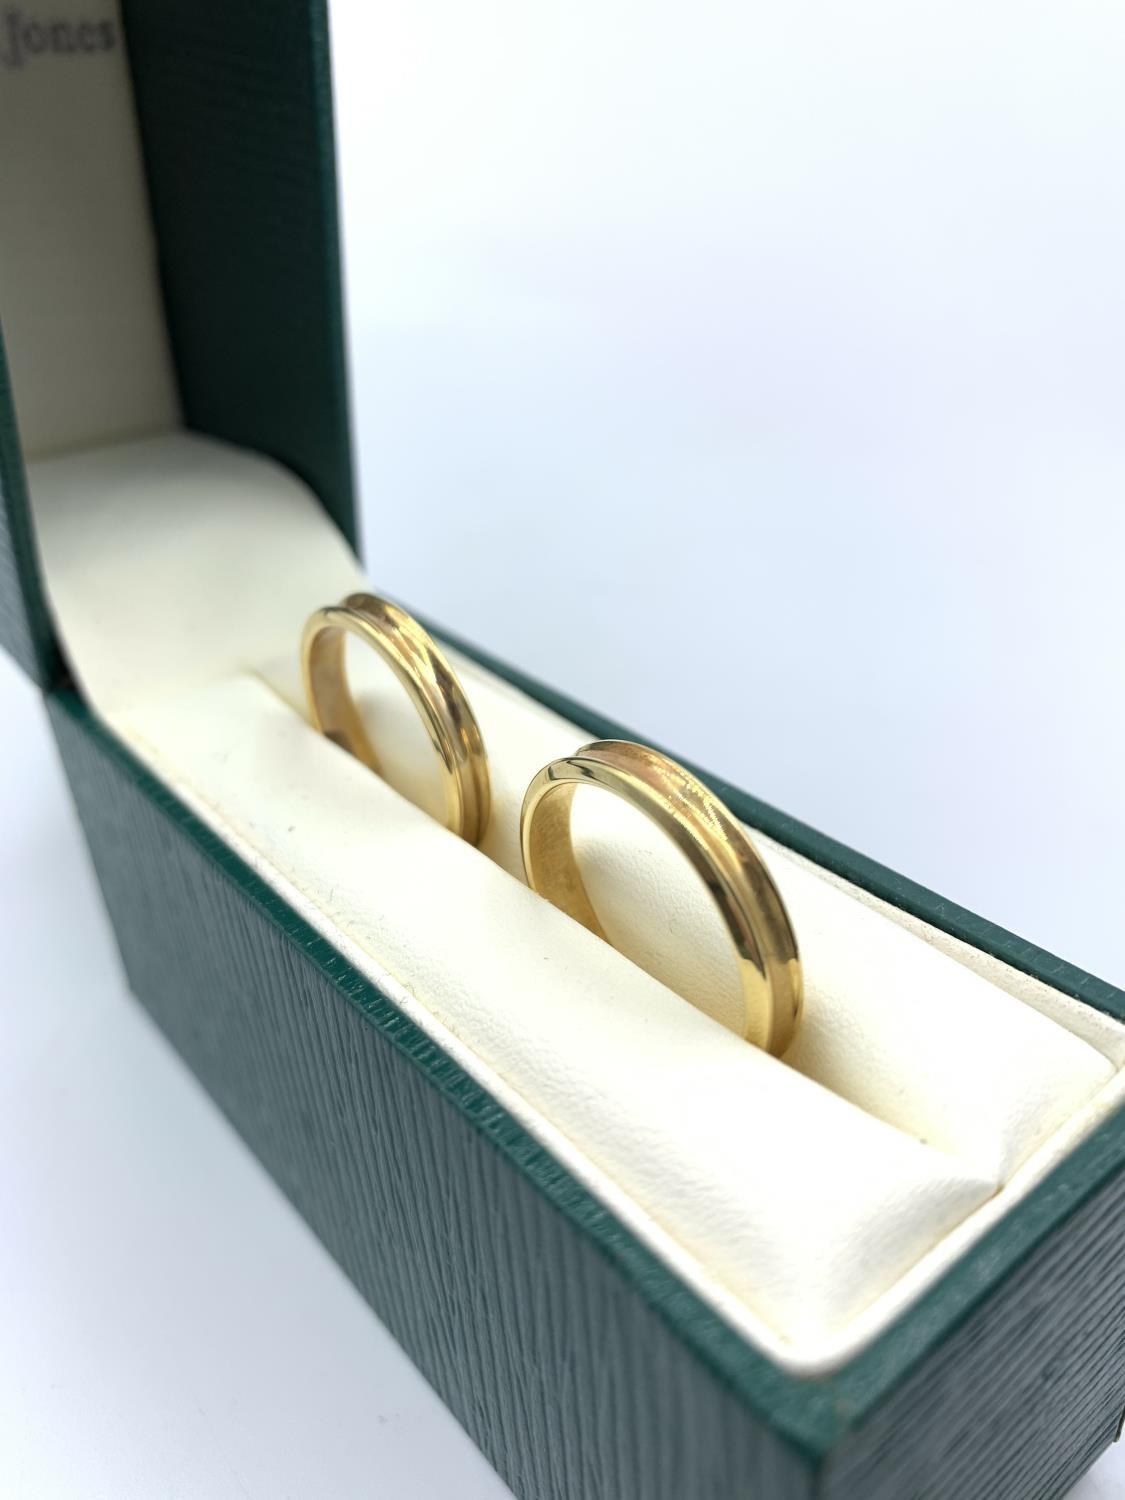 Pair of 18K Yellow Gold Hoop Earrings in original presentation box, weight 2.2g and 2cm diameter - Image 2 of 10